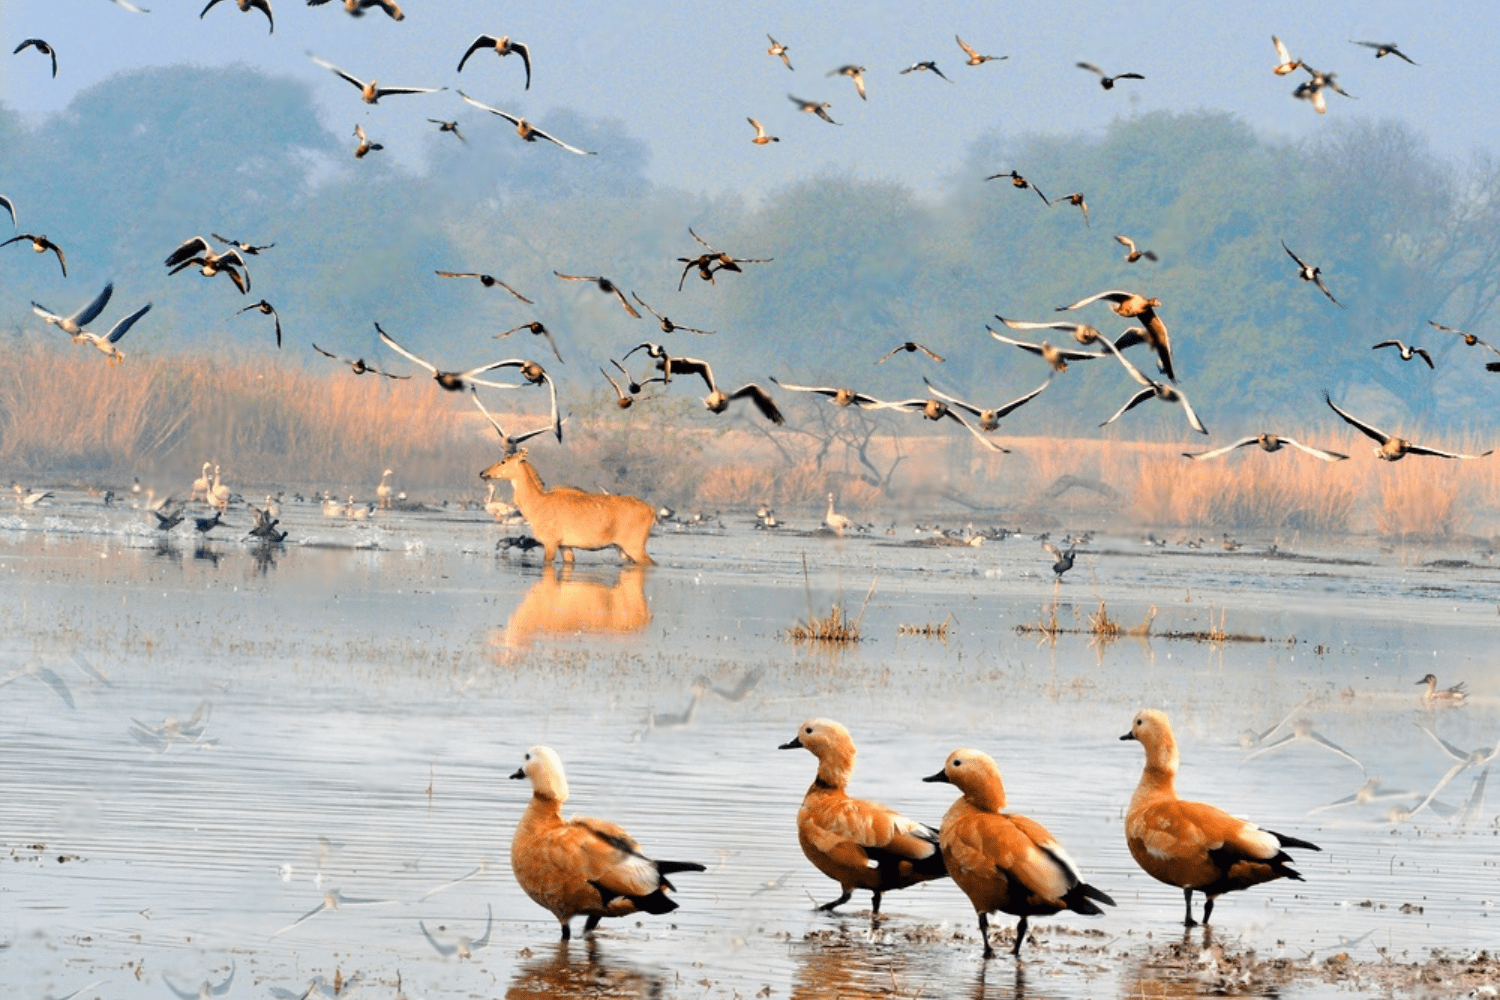 sultanpur-bird-sanctuary-manesar